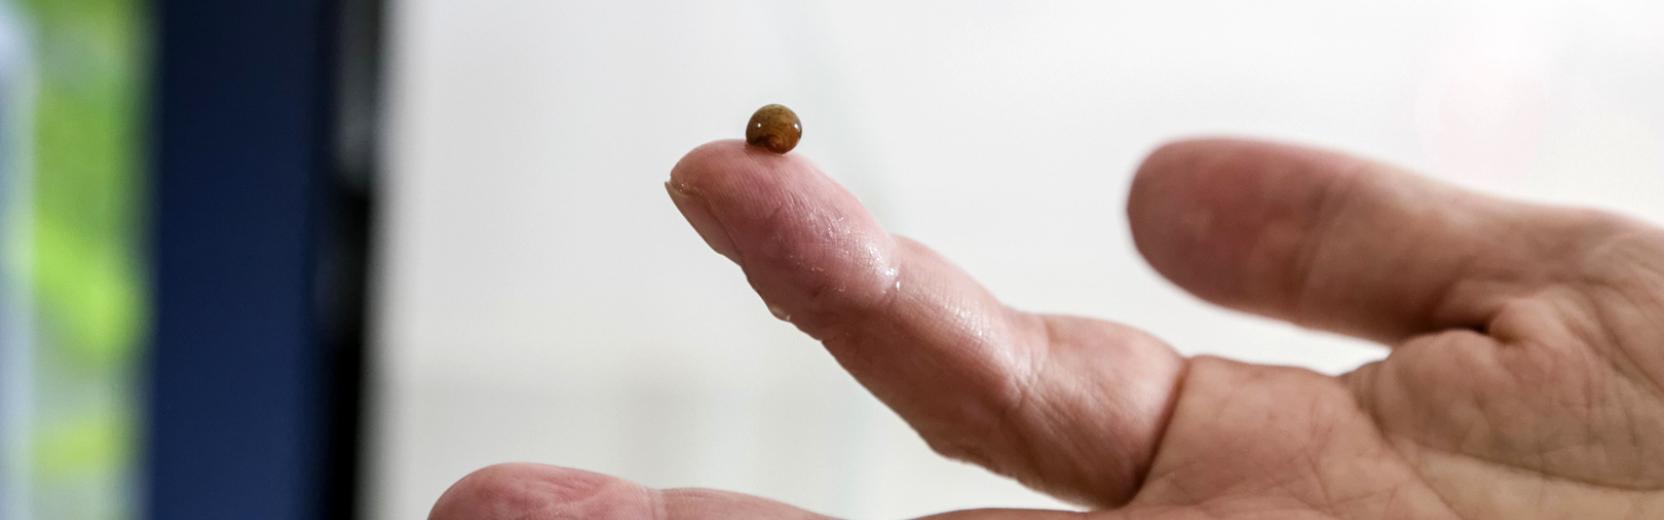 Man holding a very small slug